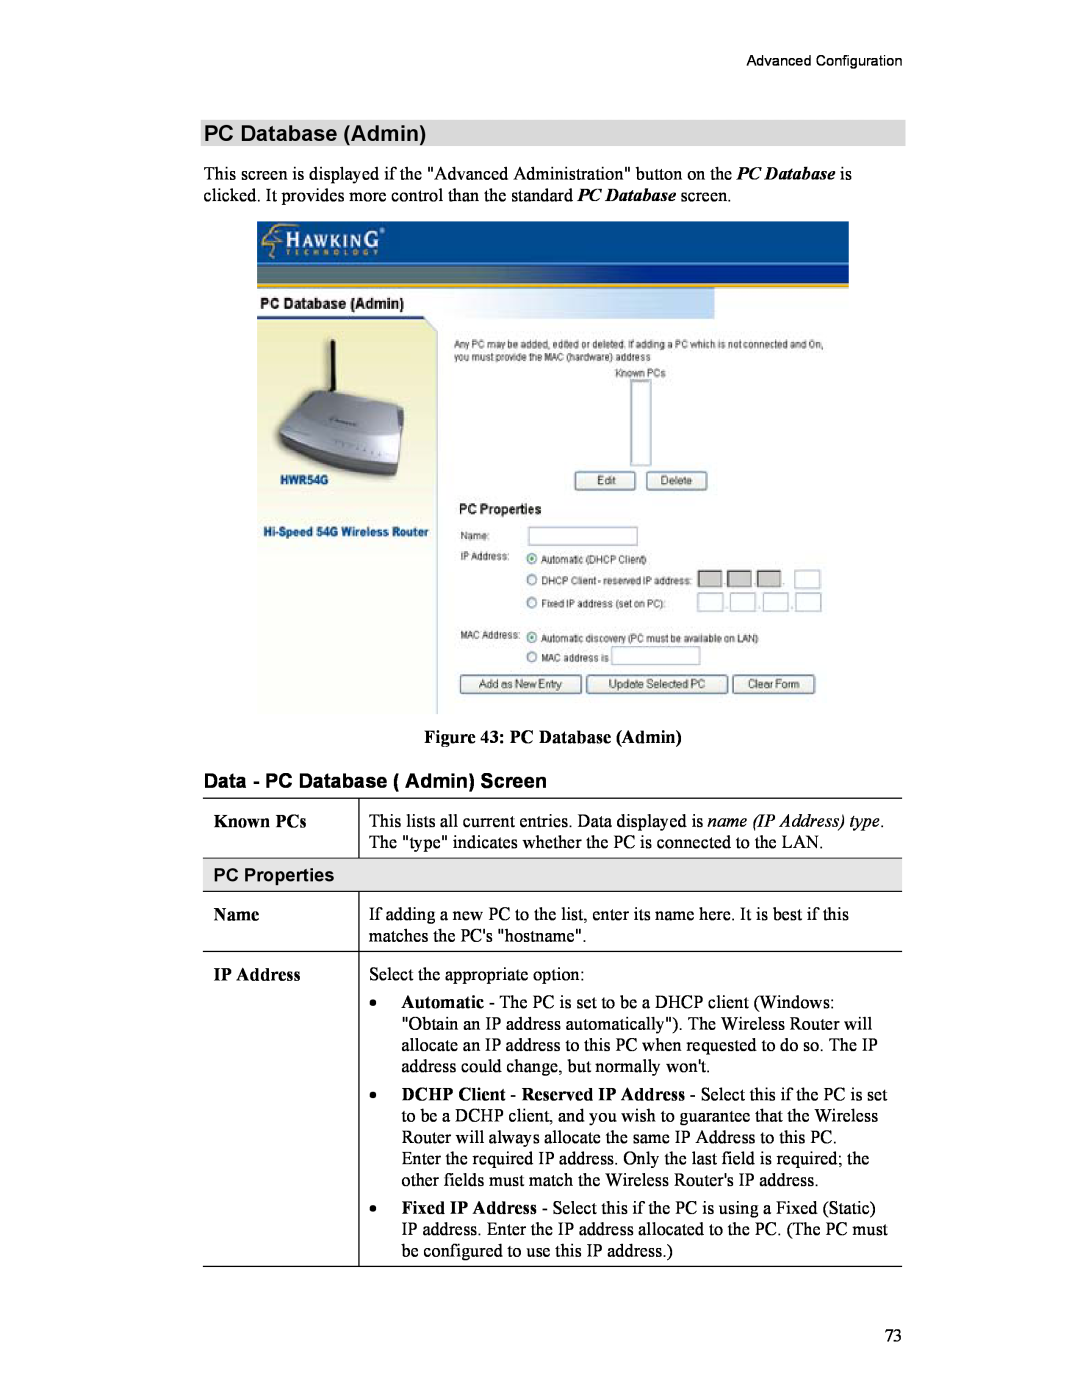 Hawking Technology HWR54G manual PC Database Admin, Known PCs, PC Properties, Name, IP Address 